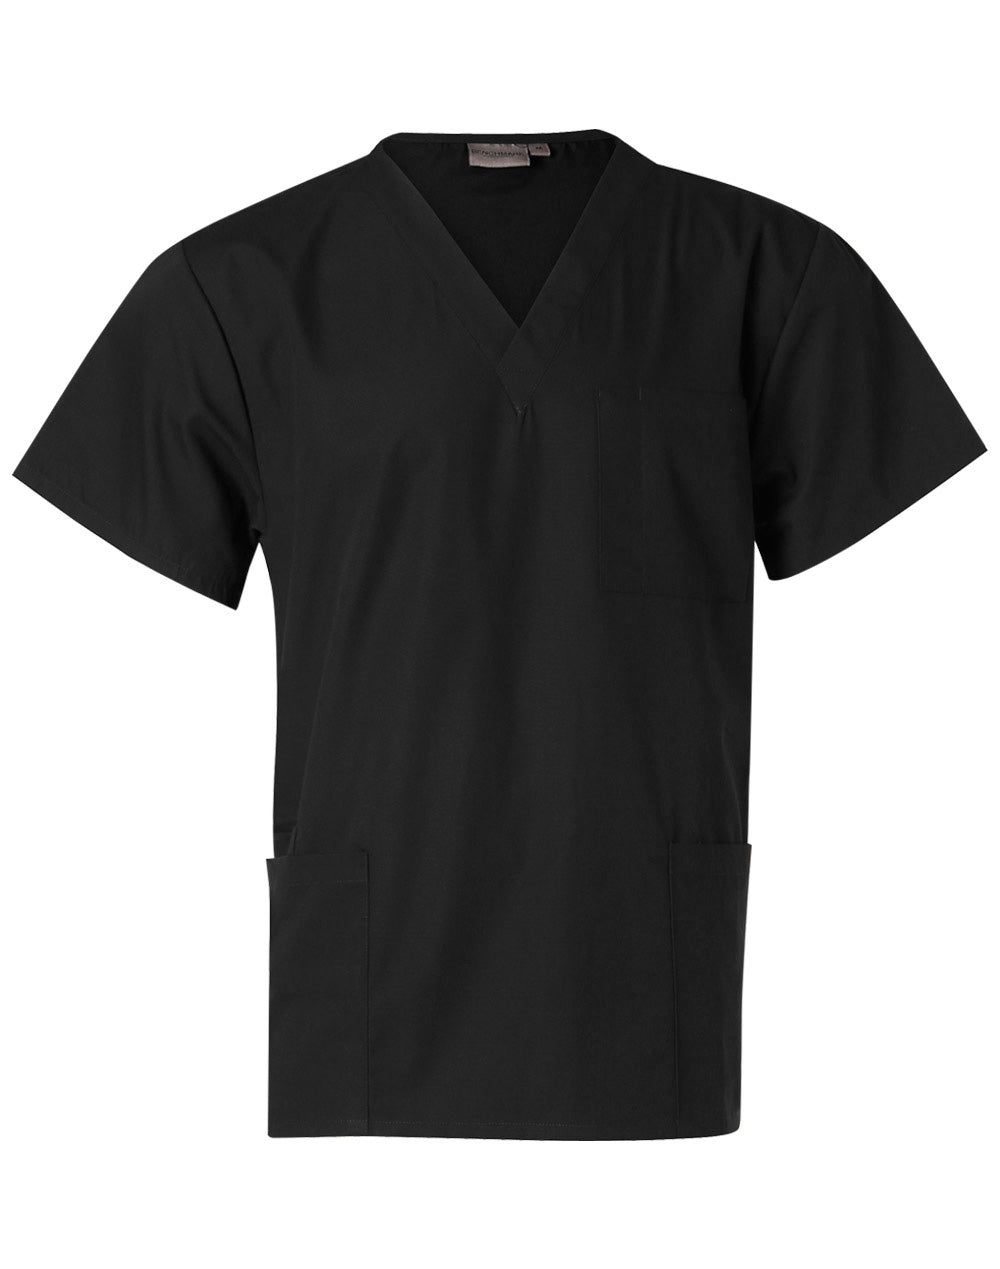 Unisex Hospital Scrubs Short Sleeve Tunic Top M7630 - Simply Scrubs Australia